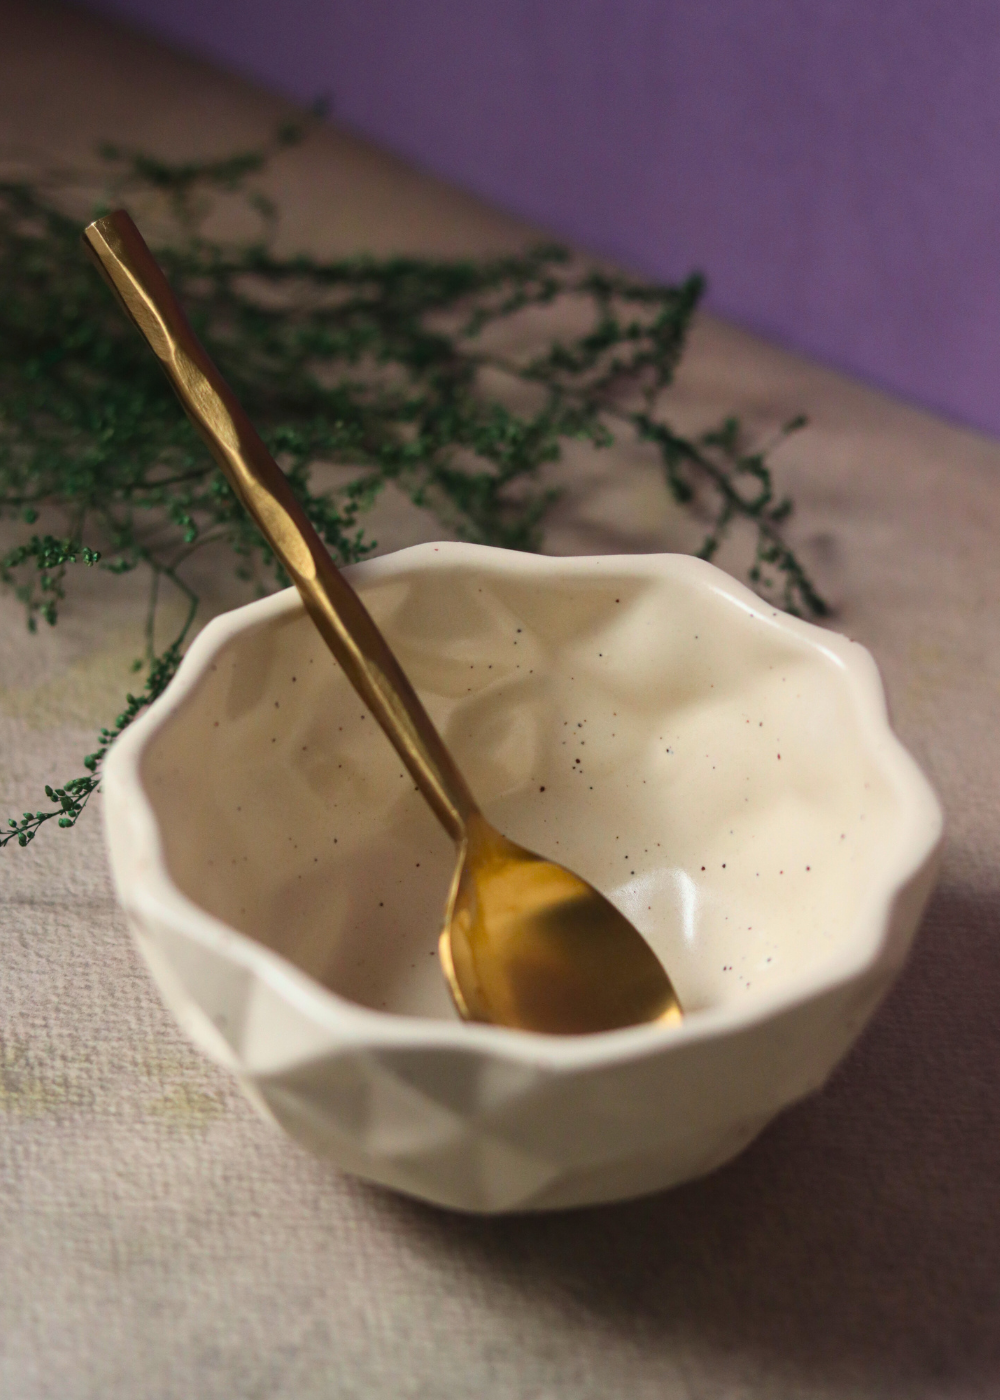 Stunning white diamond ceramic bowl with spoon